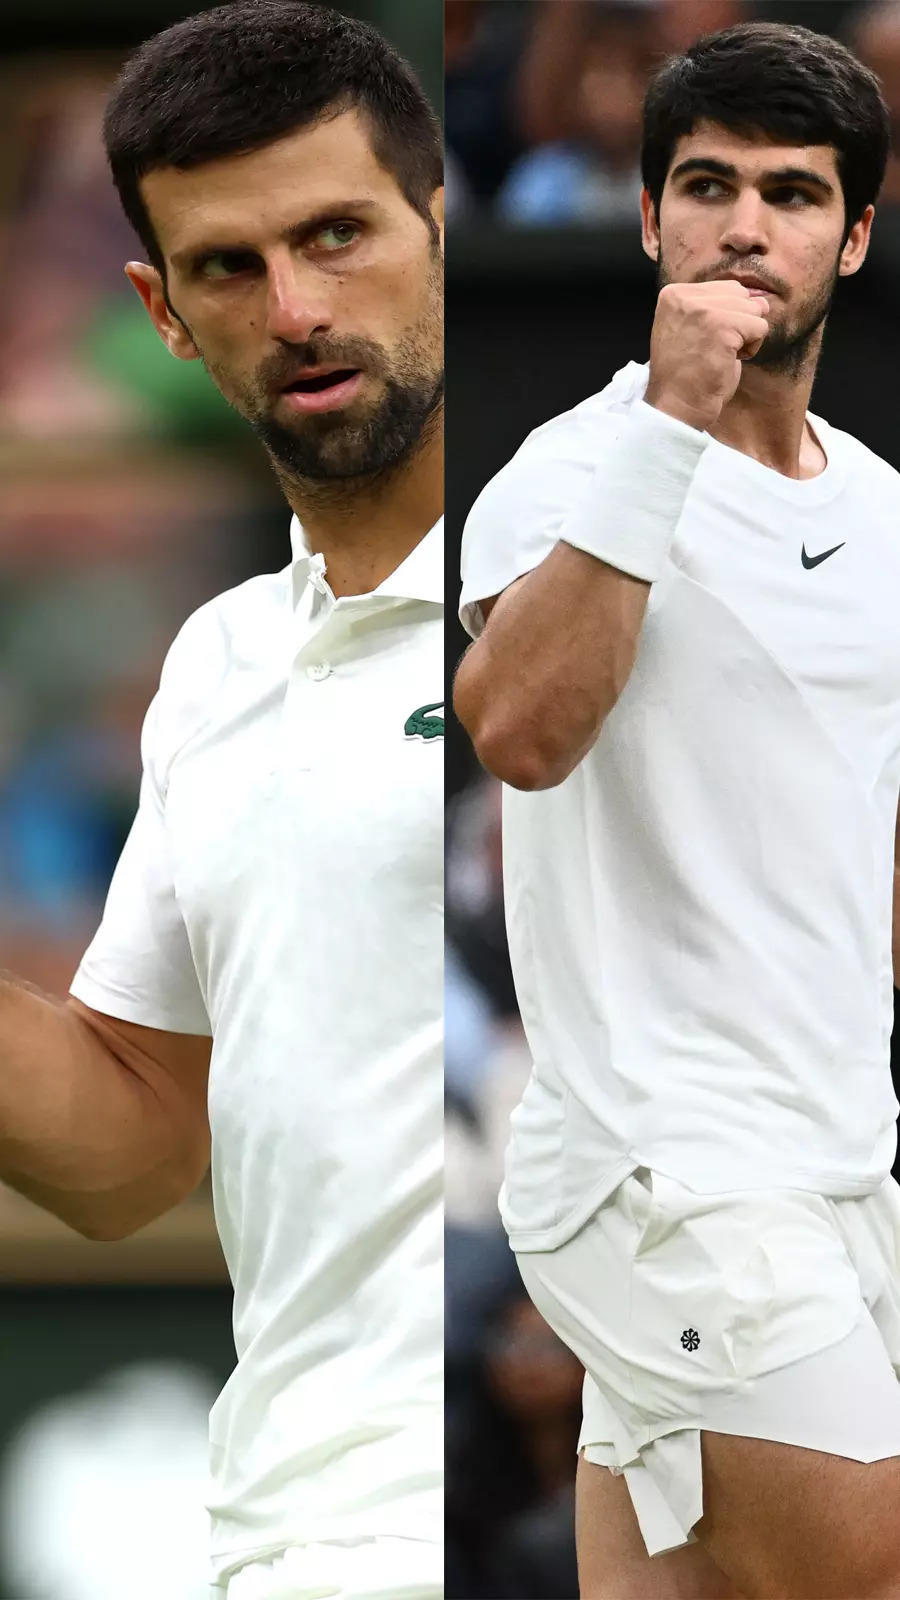 Wimbledon History on the line in Djokovic vs Alcaraz final/u200b Times of India